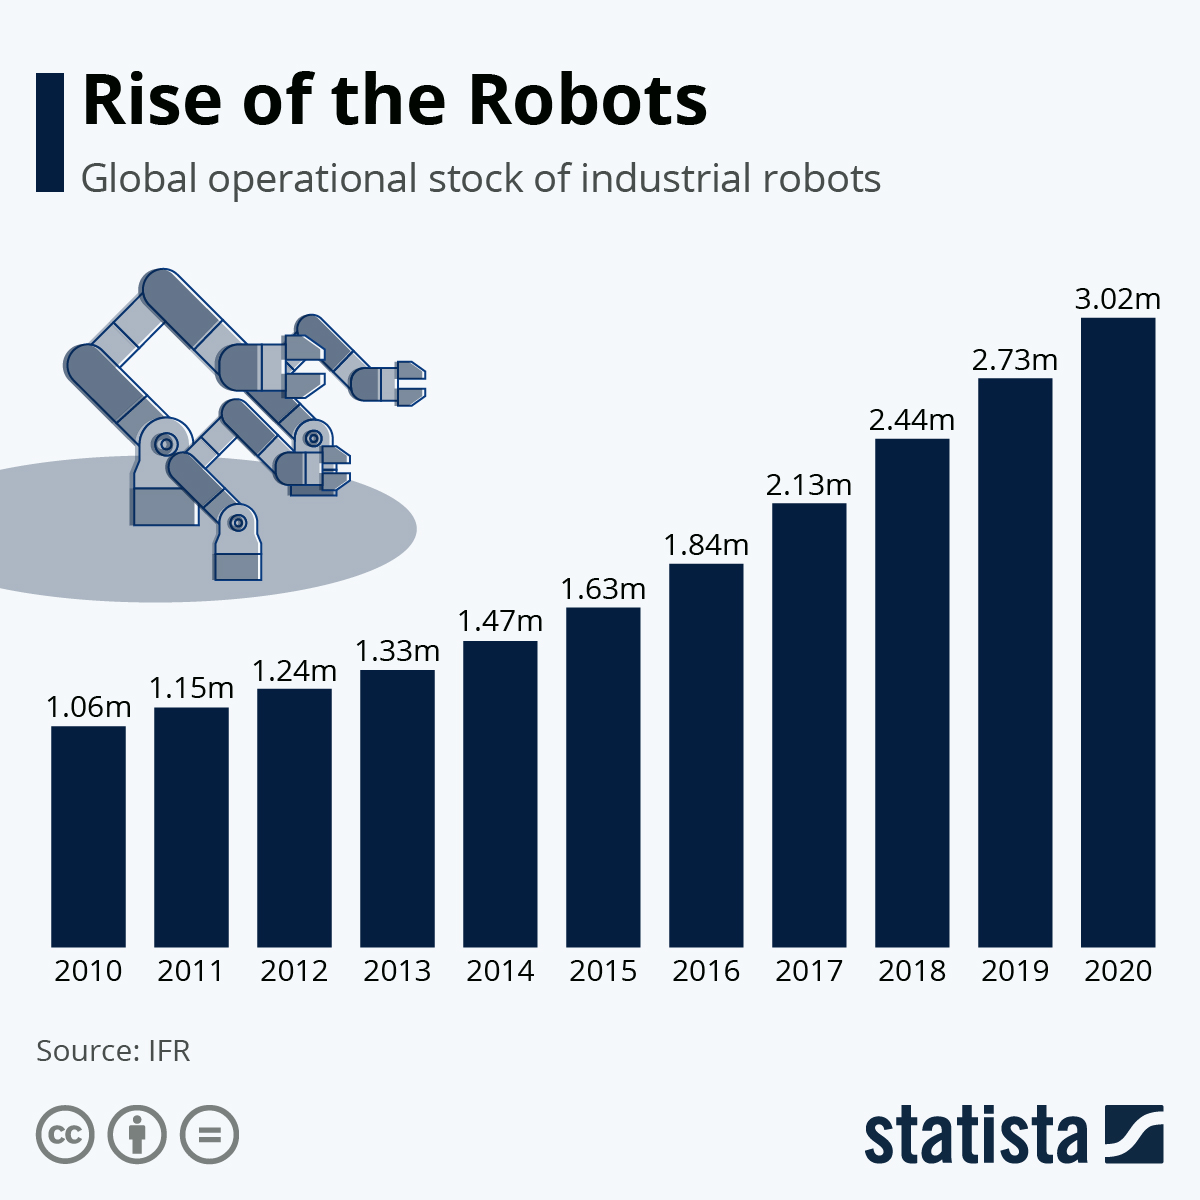 Rise of the Robots 

#Robot #IndustrialRobots #robotics #AI #Statista #IFR